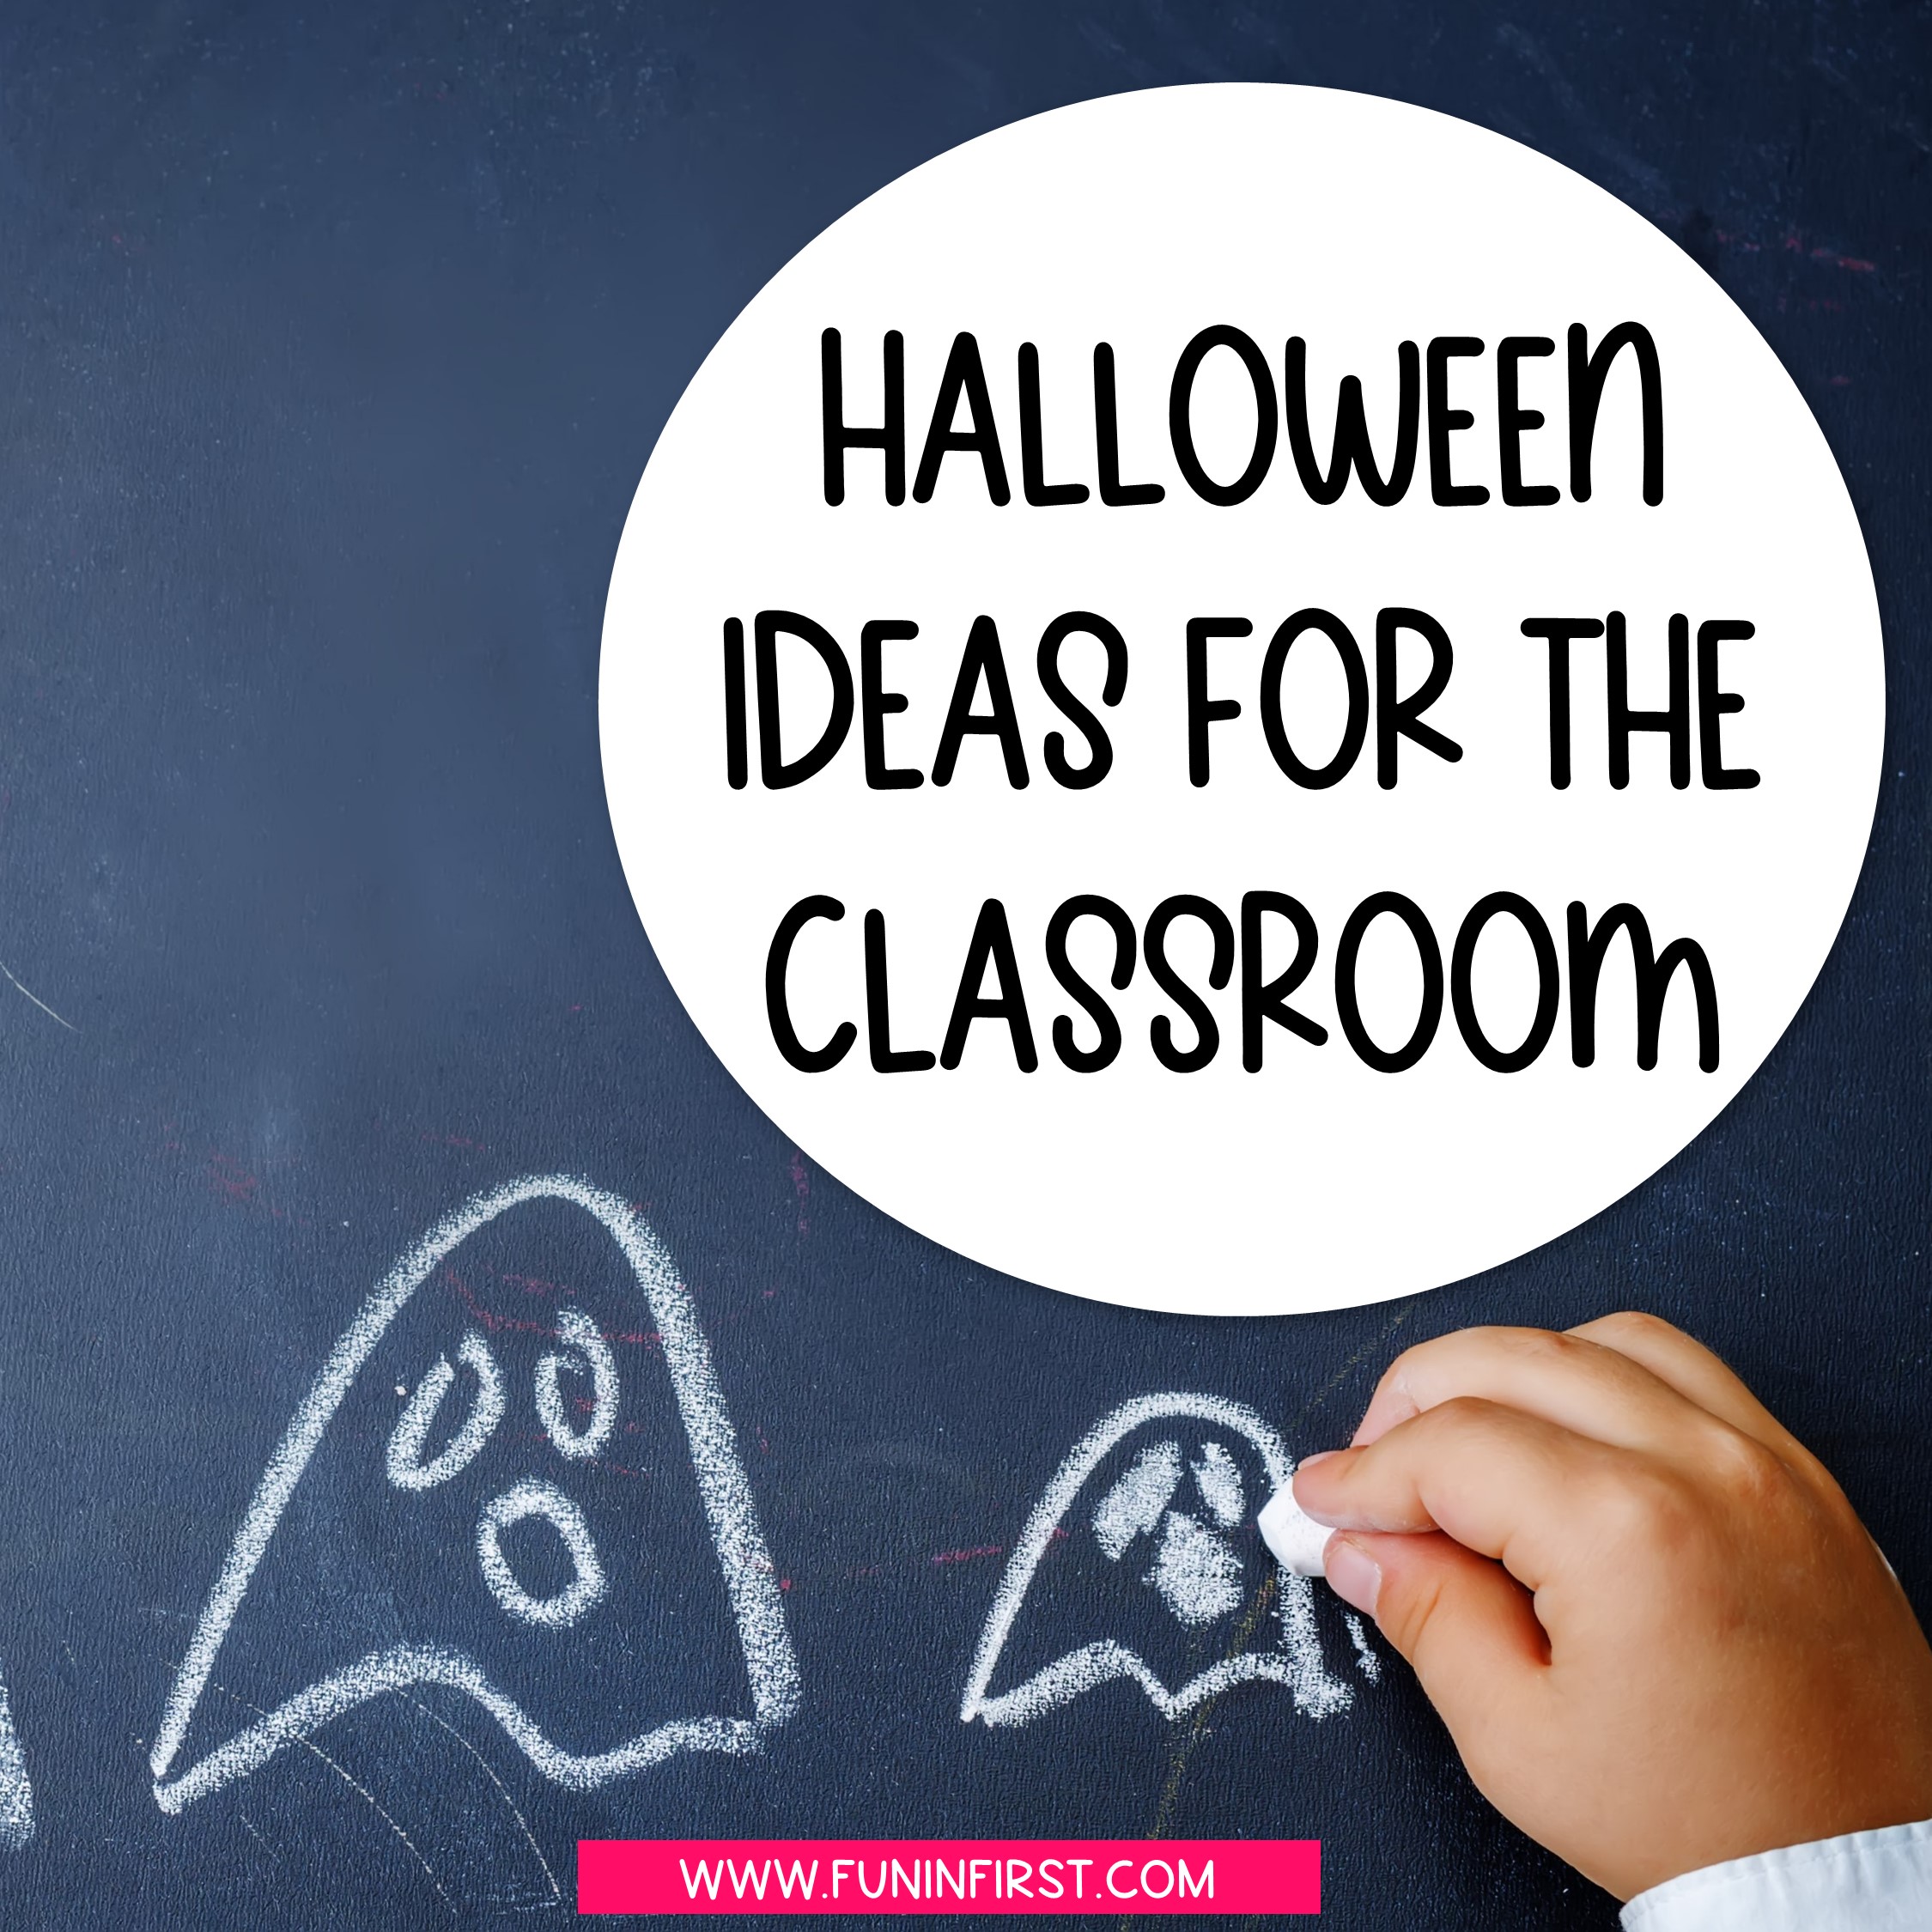 Halloween Classroom Decorations and Activity Ideas